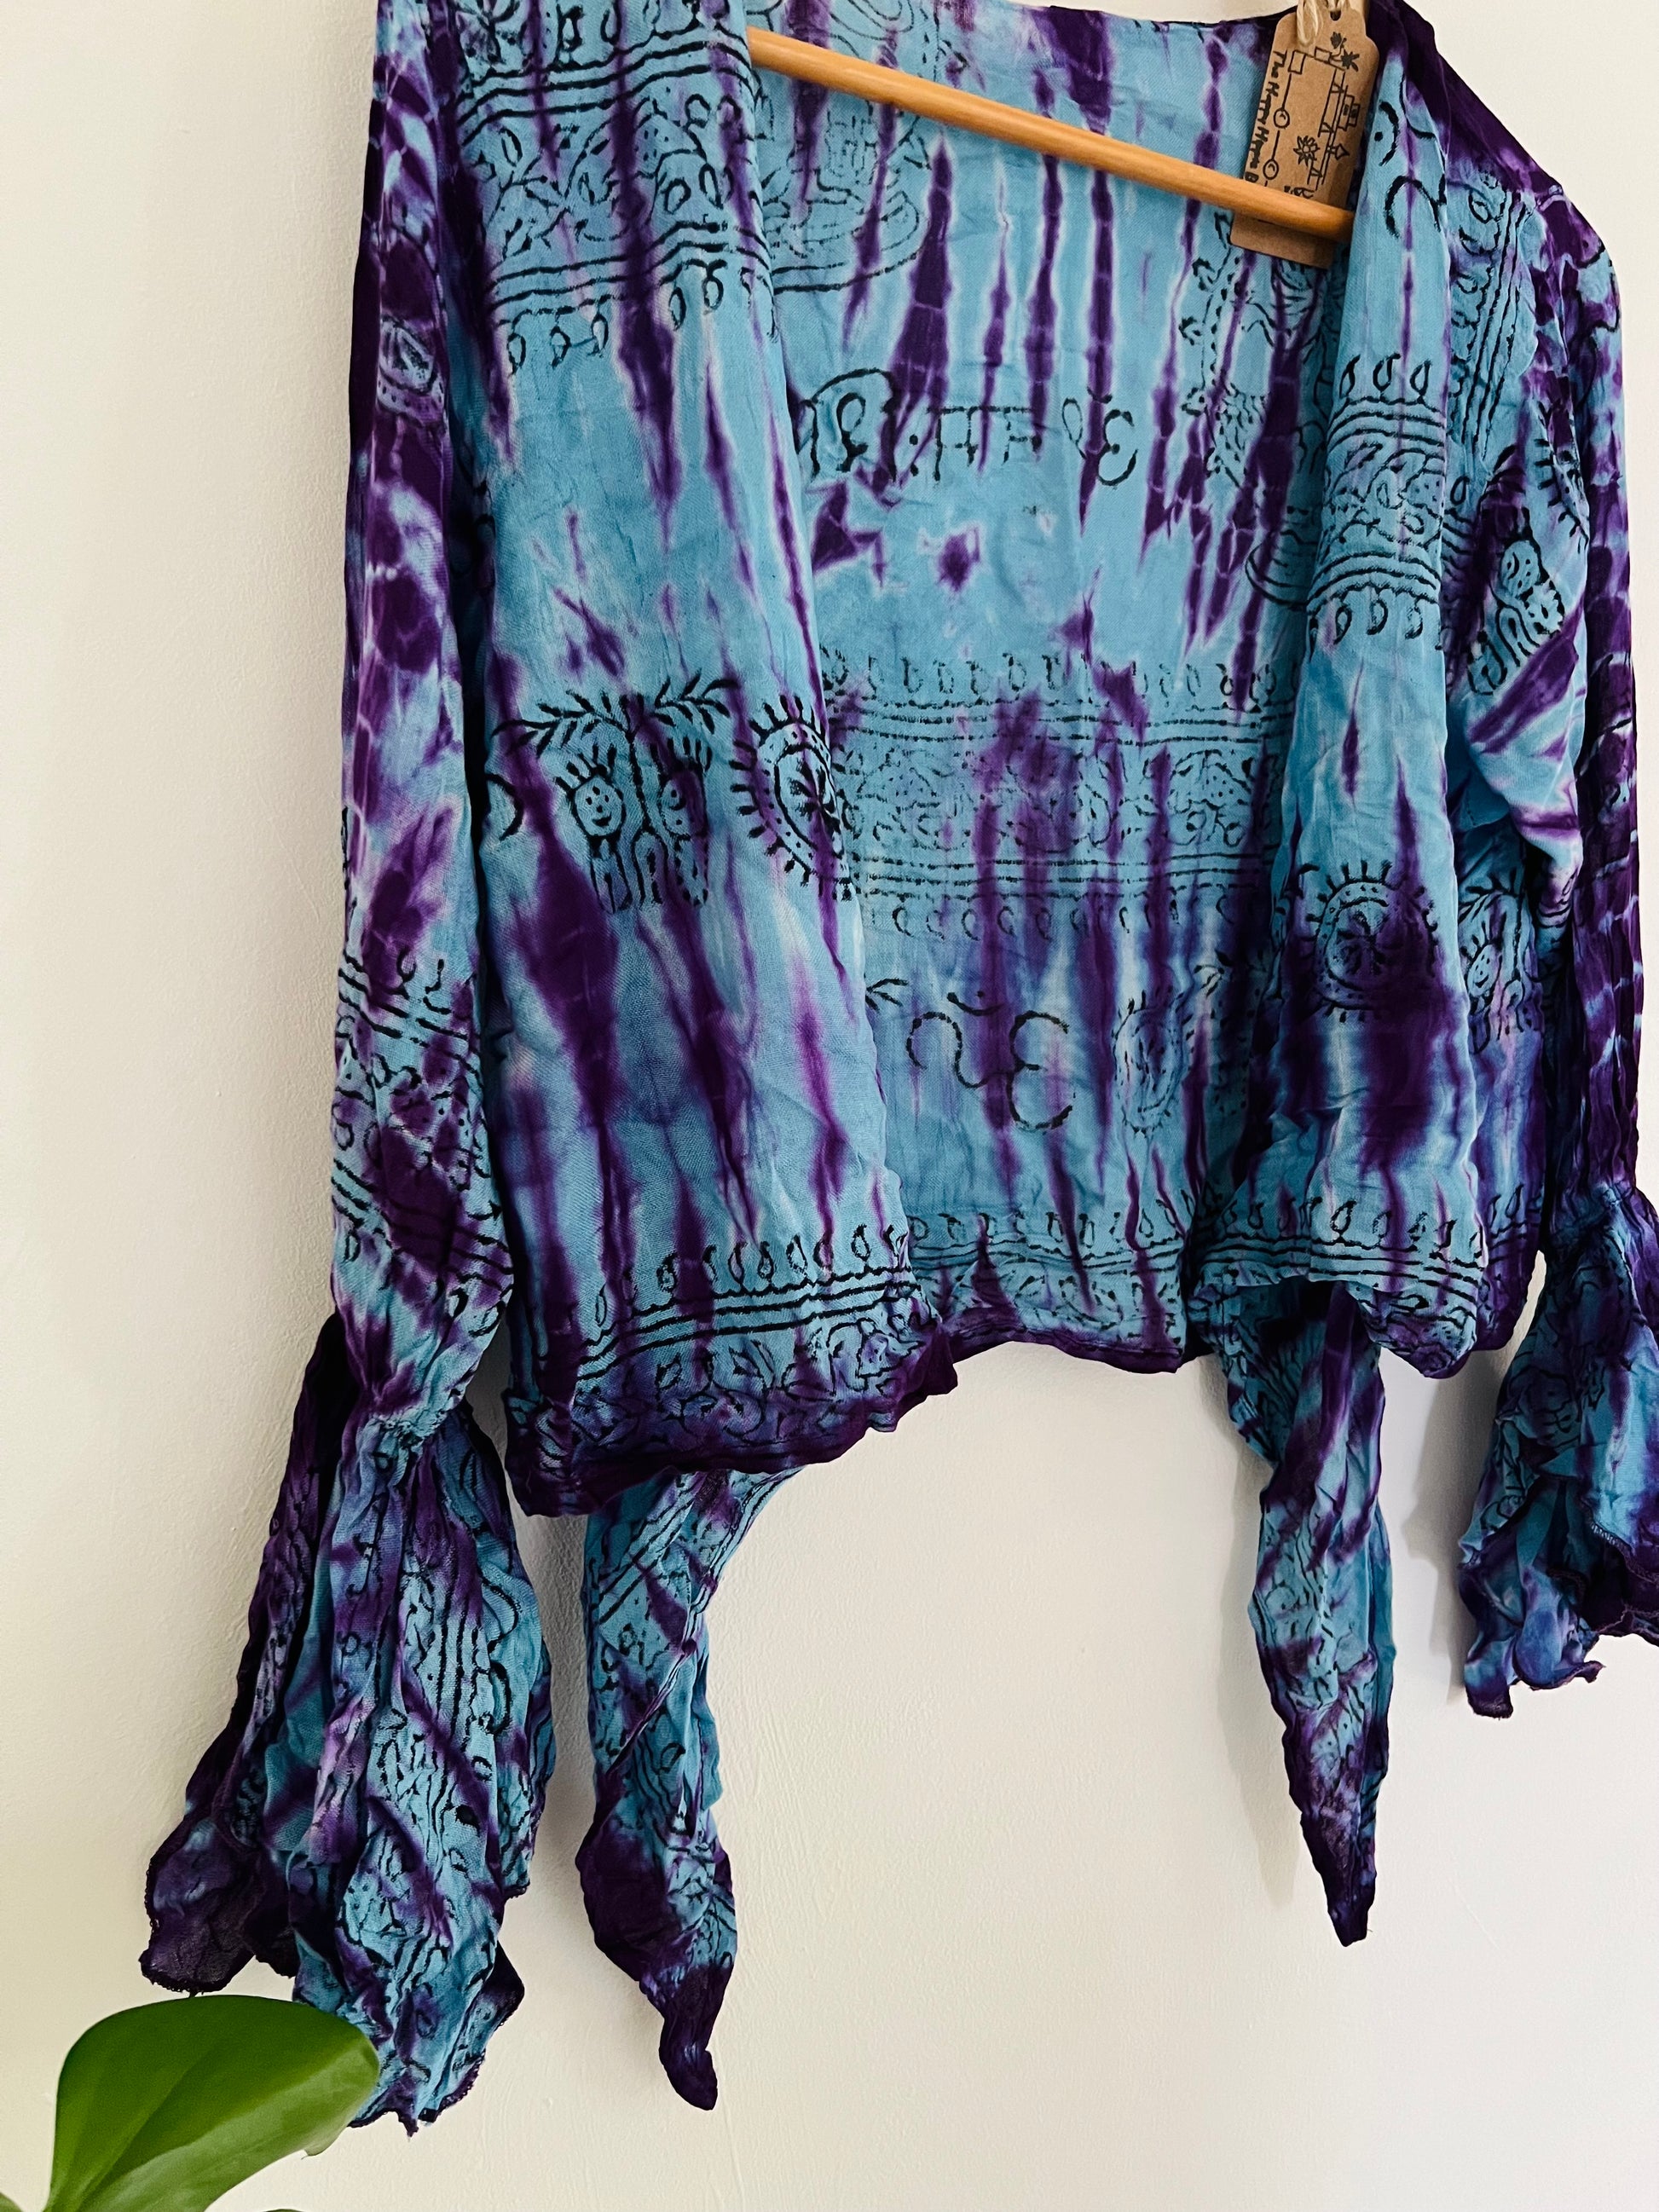 Handmade Fair Trade Hippie Boho Blue & Purple Prayer Top Slow Fashion 